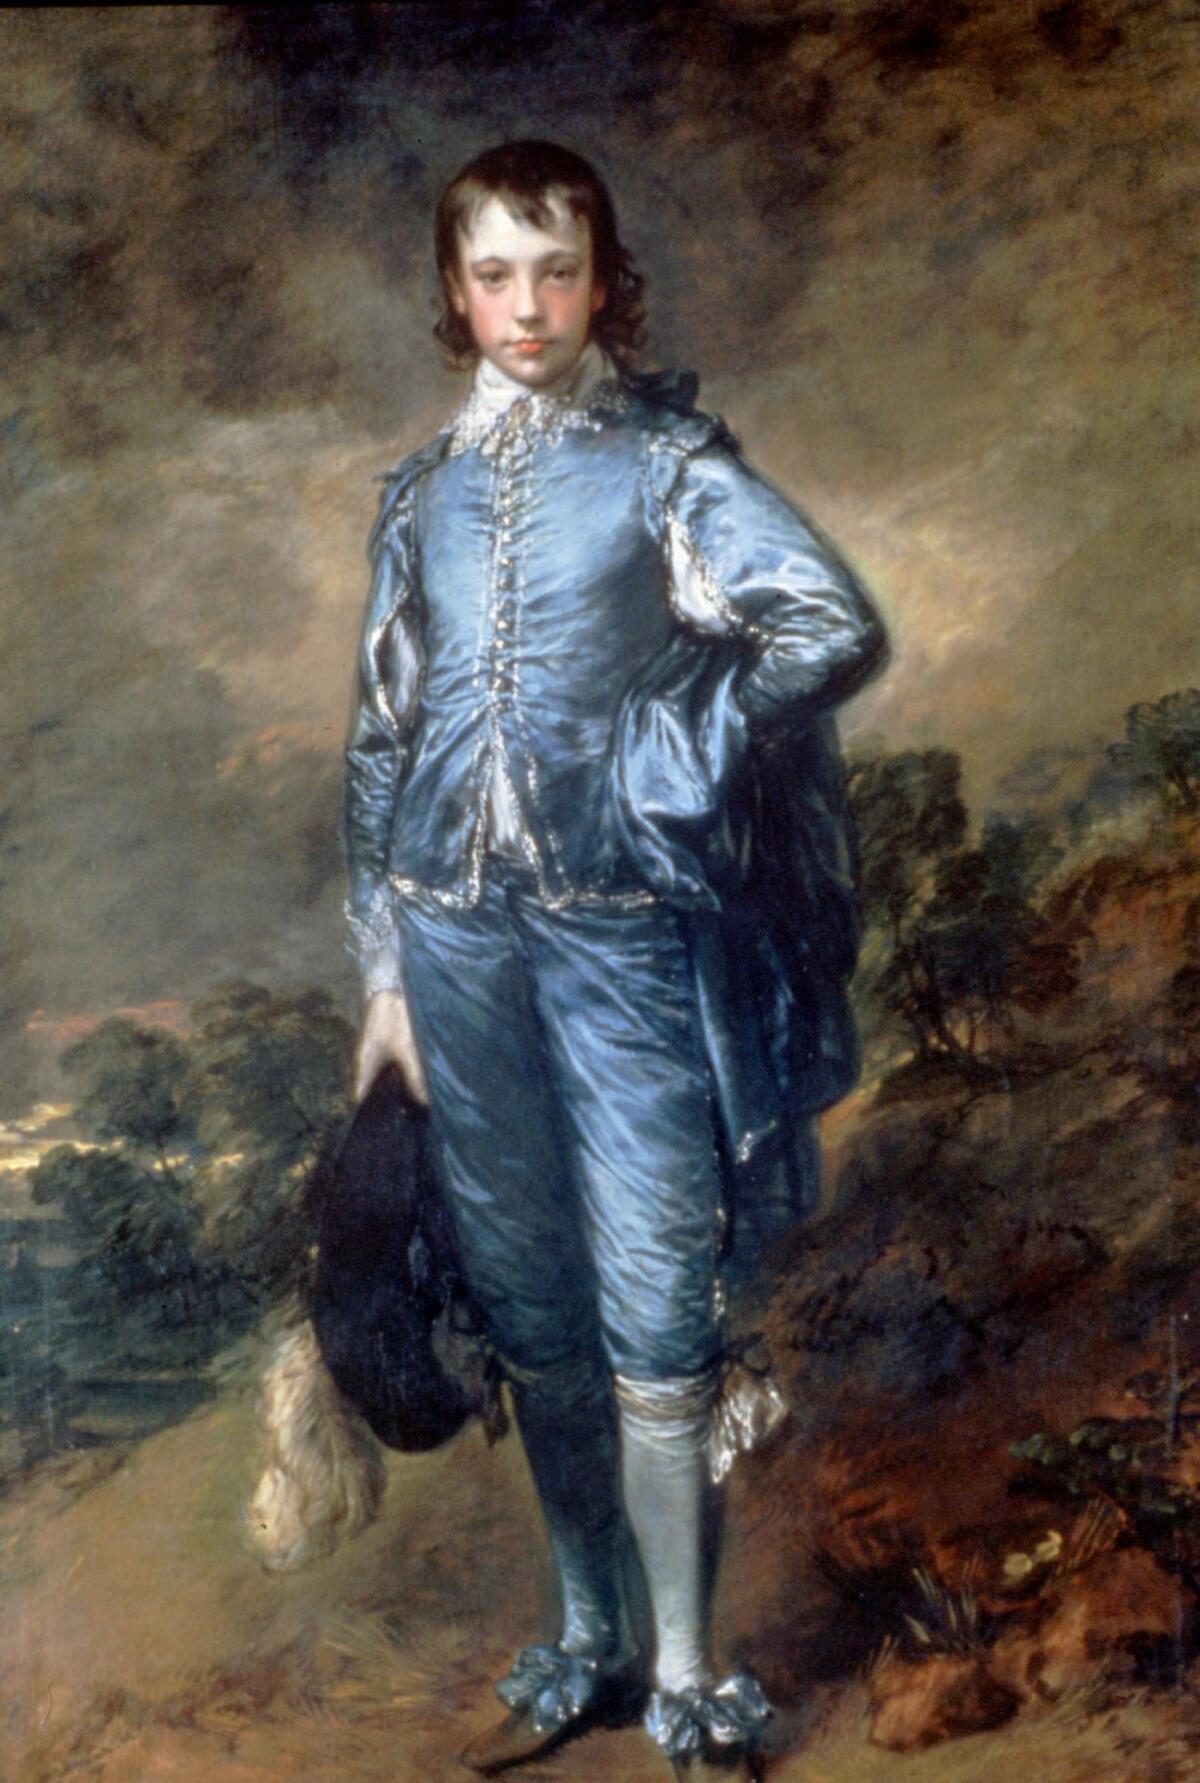 Thomas Gainsborough's "Blue Boy."